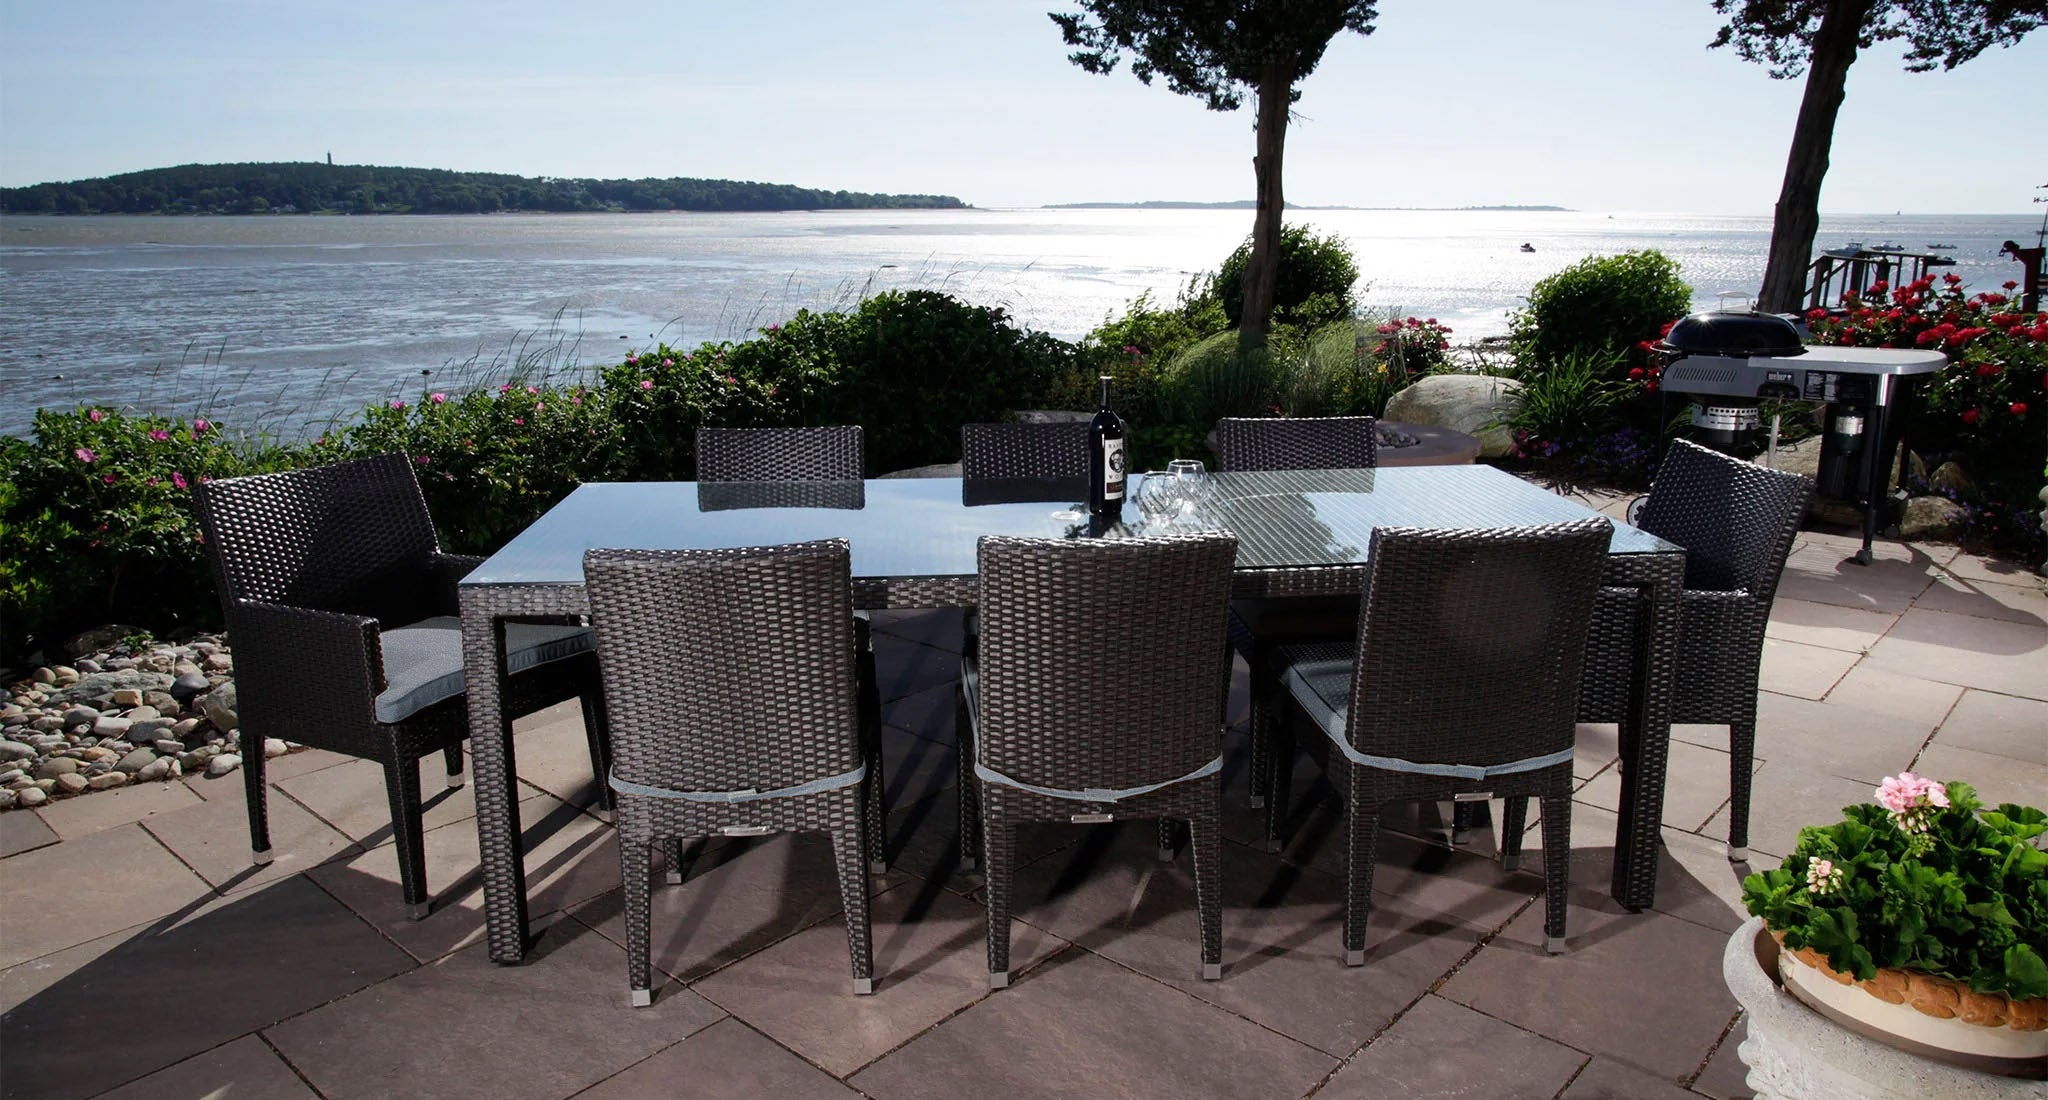 Salina outdoor dining set for 8 - Sunbrella Cast Slate